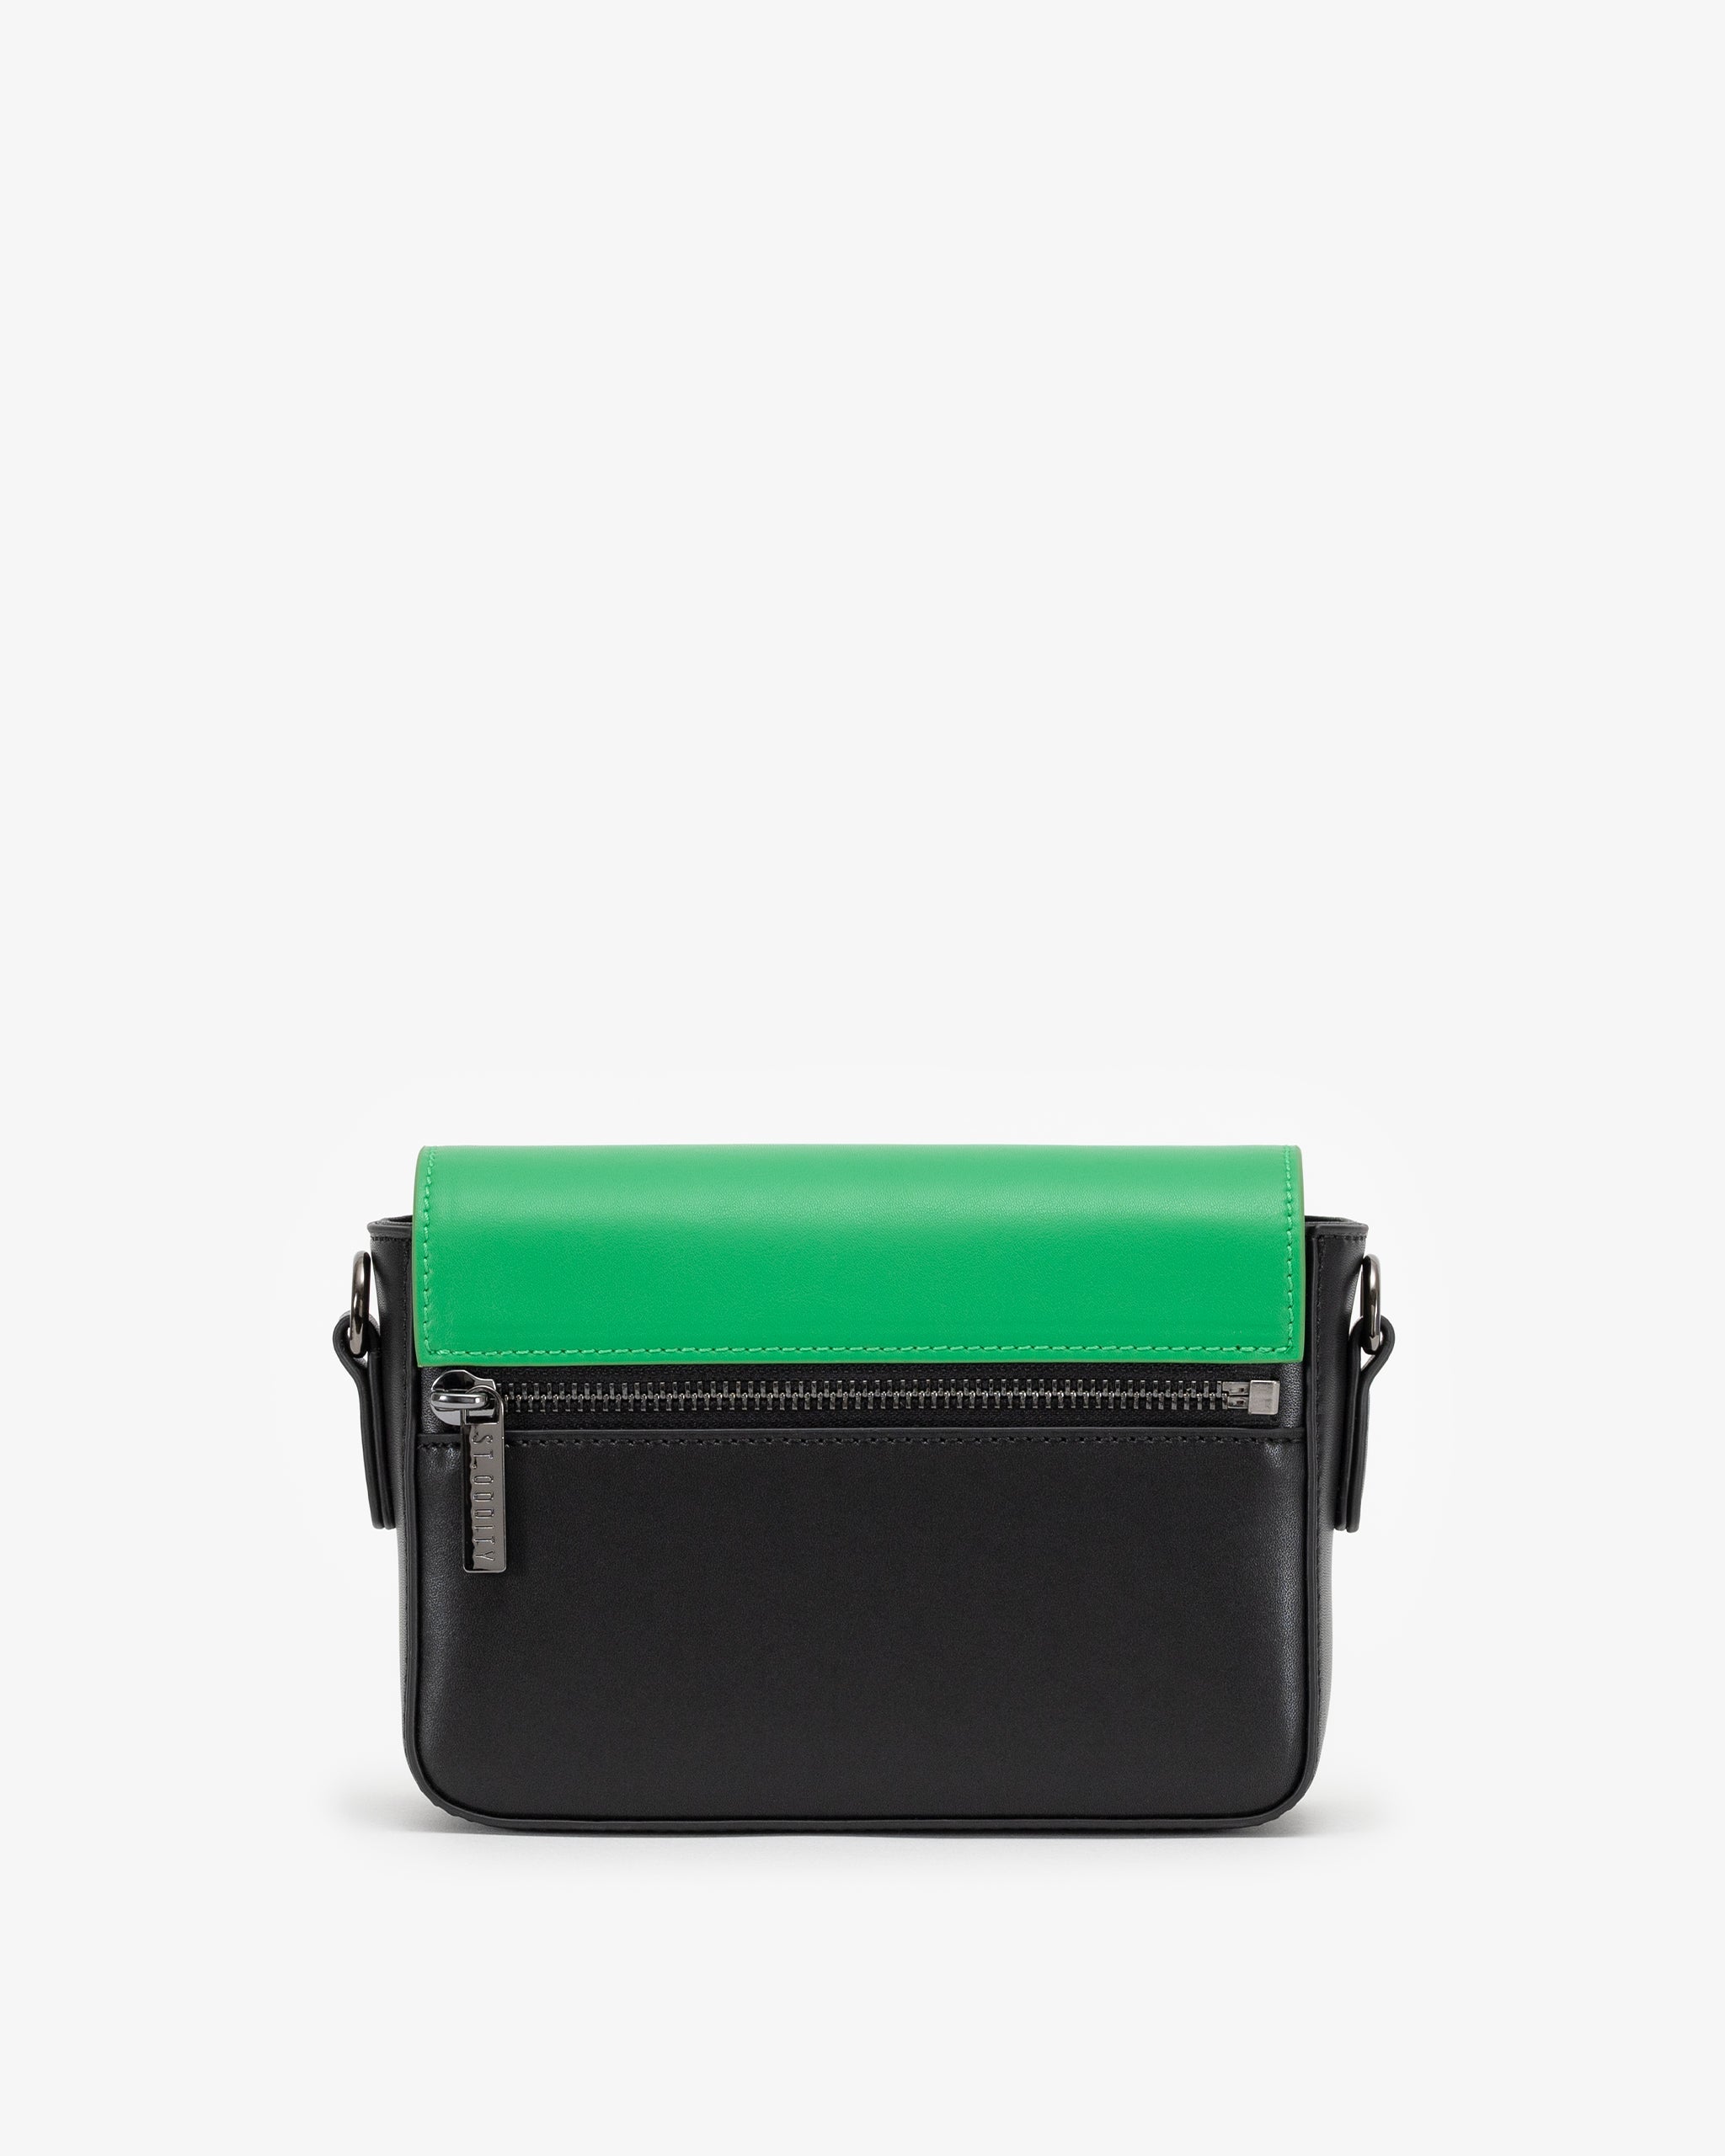 Crossbody Bag with Street Strap in Grass Green/Black – St. Oddity